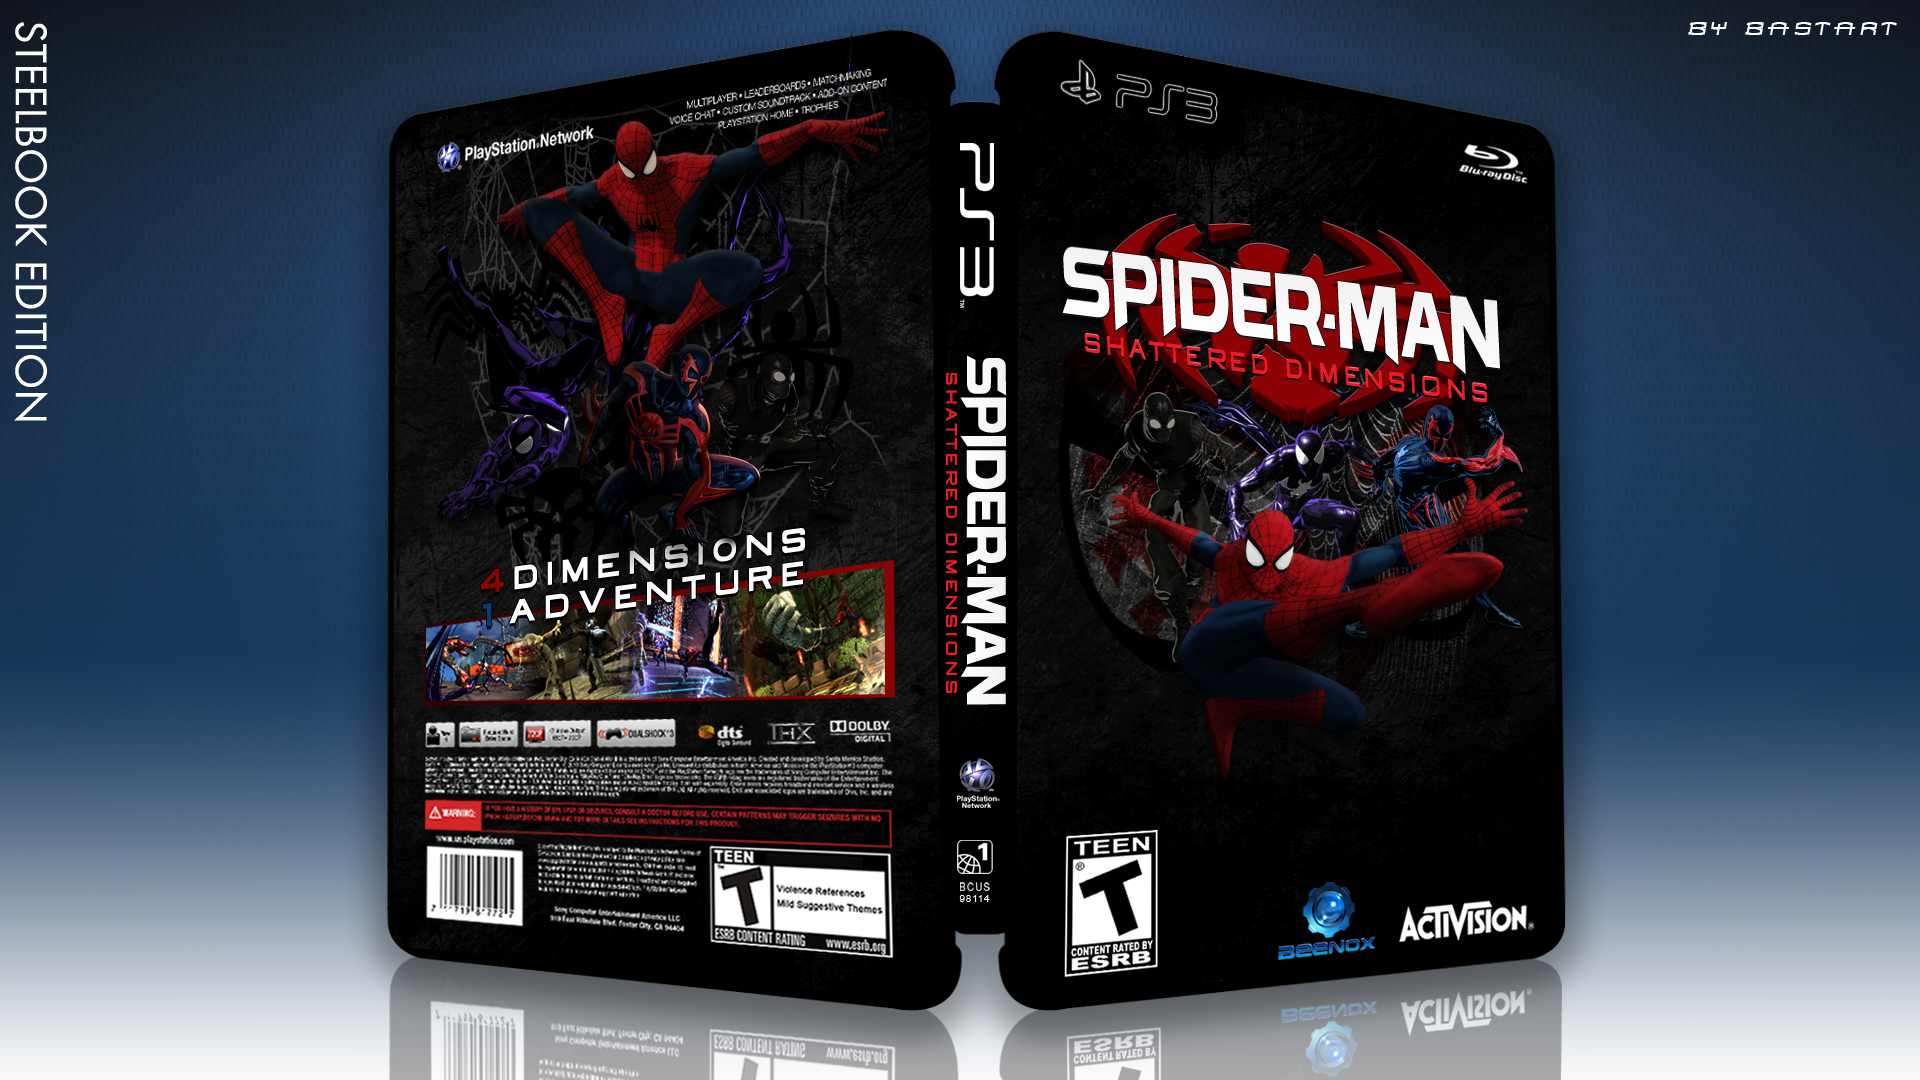 Spider-Man: SD (steelbook edition) box cover